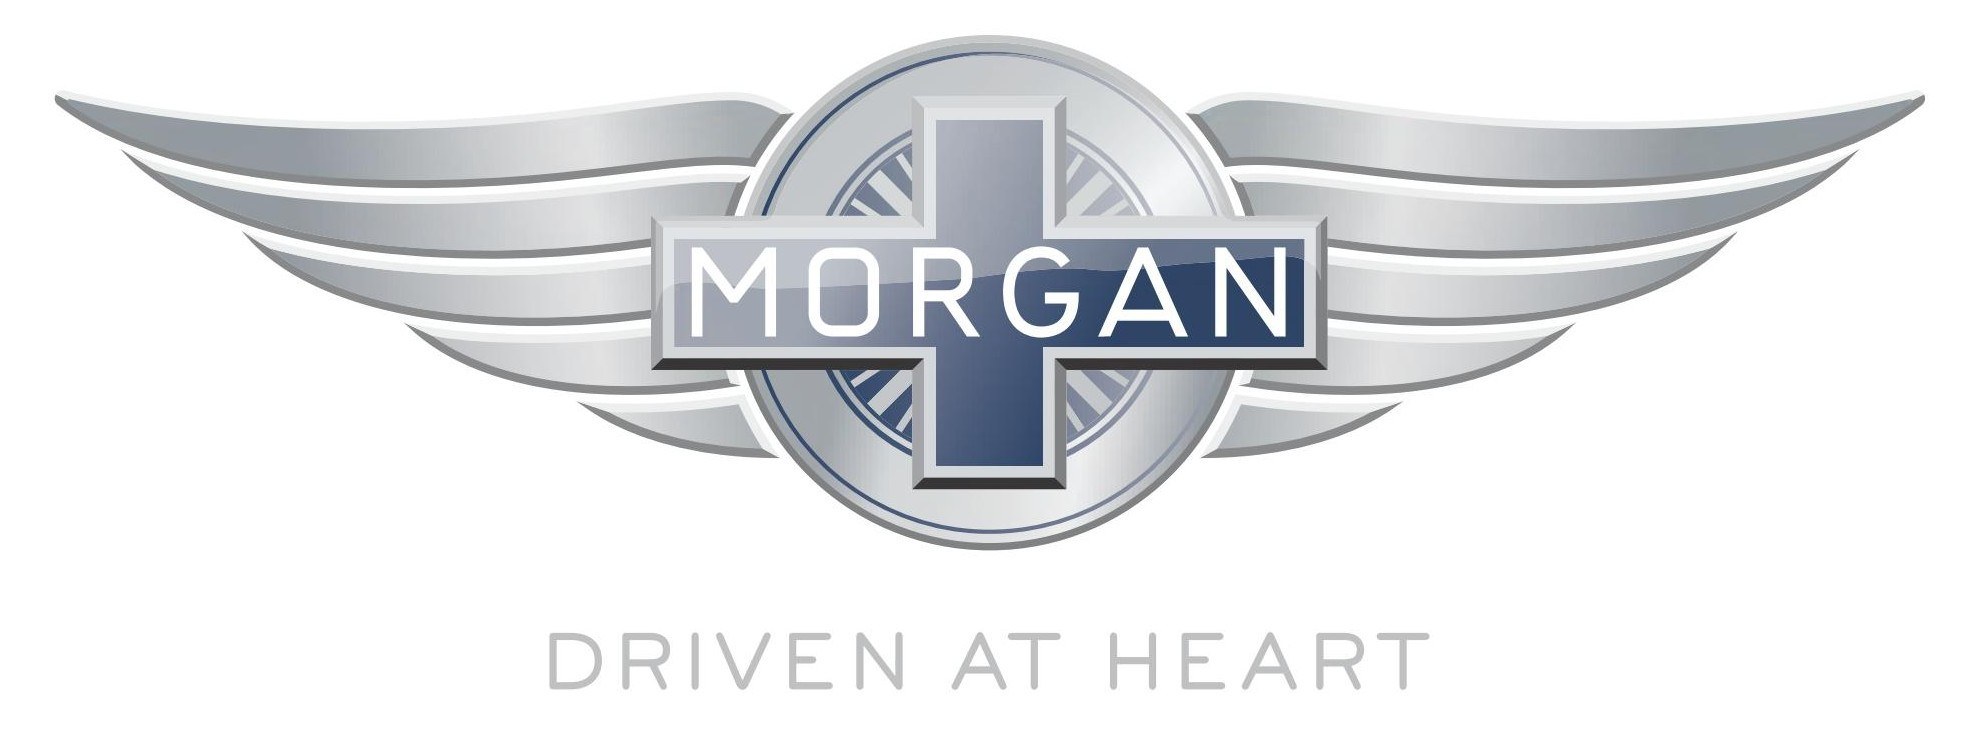 morgan motor company logo